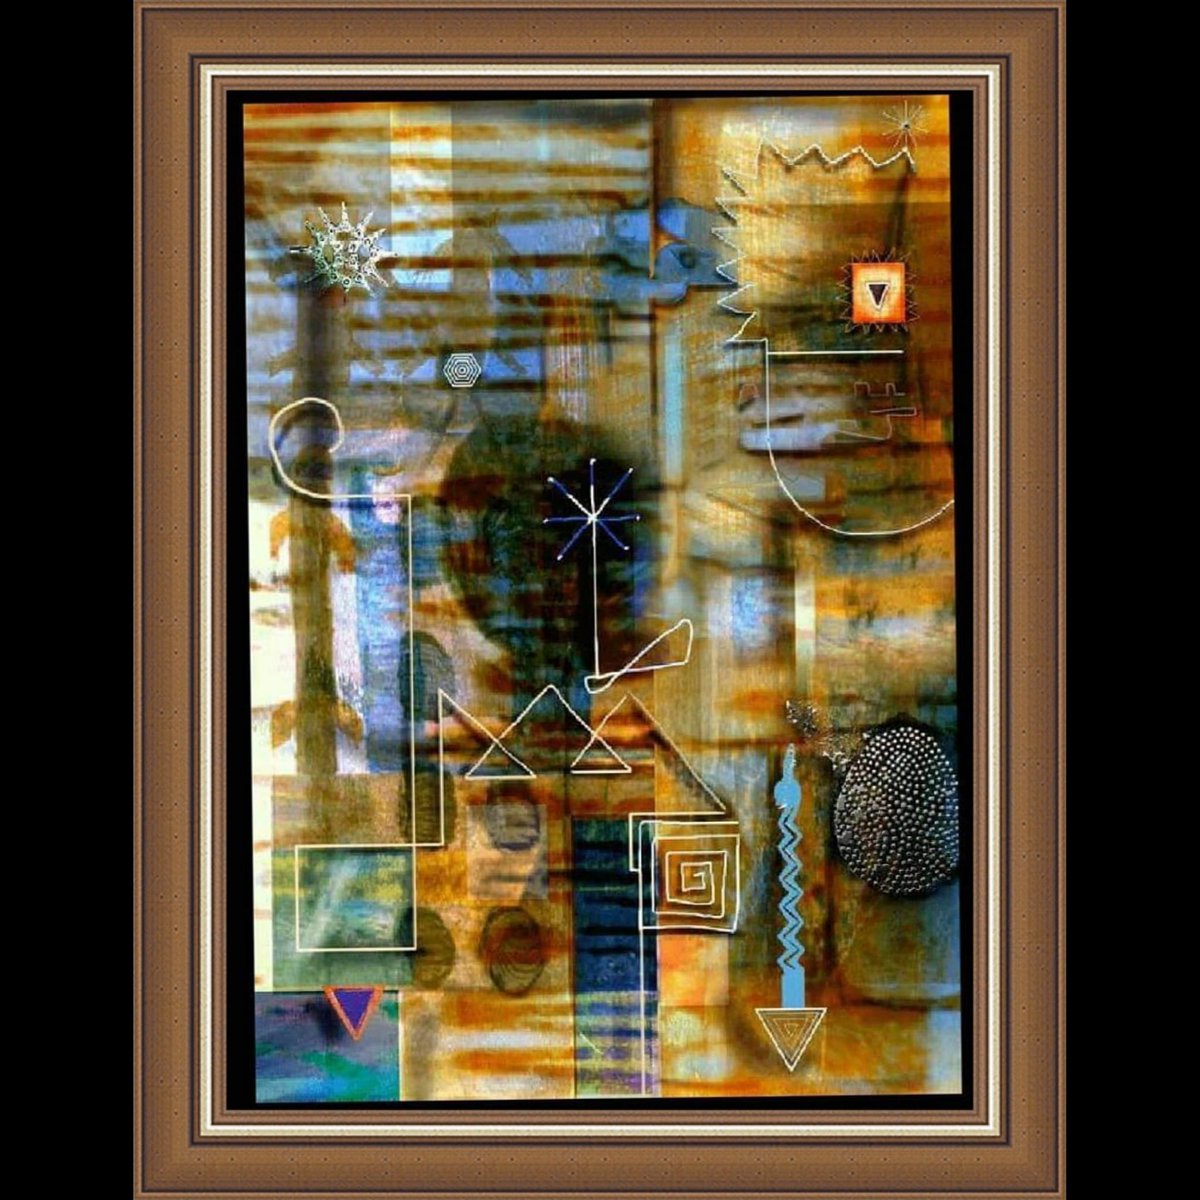 Roberto Saavedra Walker Art
'Composition'
#visualcreator no #abstract_art #pintura_abstracta #Artabstrait #arteabstracto #malereiabstrakt #abstracktekunst #abstrakt_painting #nyc_art #ukart #Art_Paris #tokyoartsandculture #interiordesign #modernekunst #abstractionlyrique #kultur